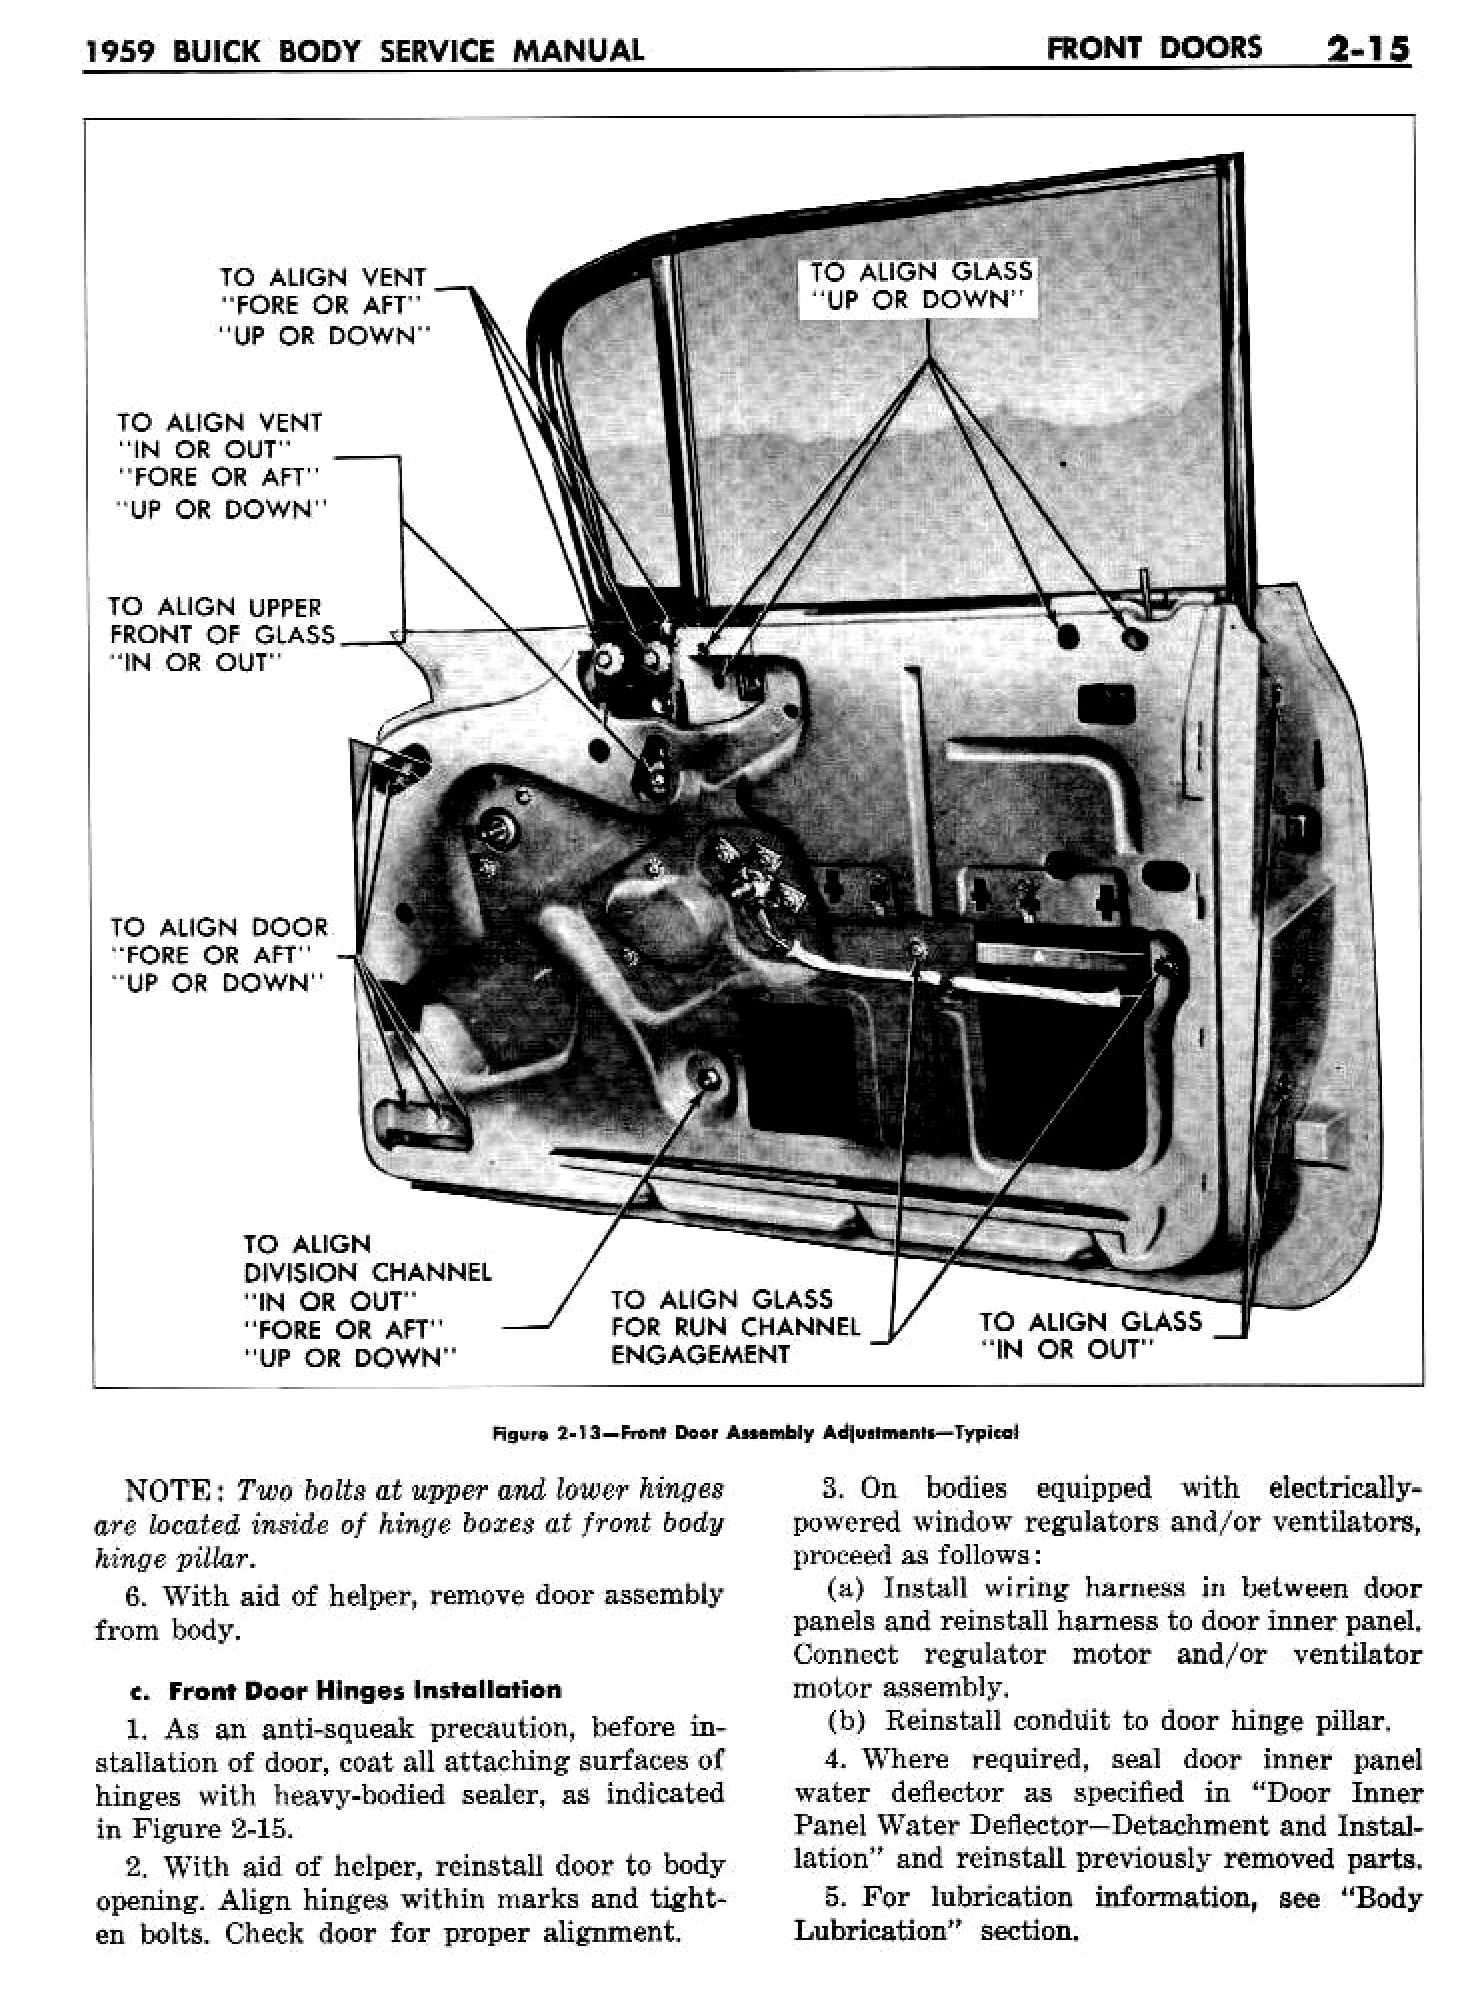 n_03 1959 Buick Body Service-Doors_15.jpg